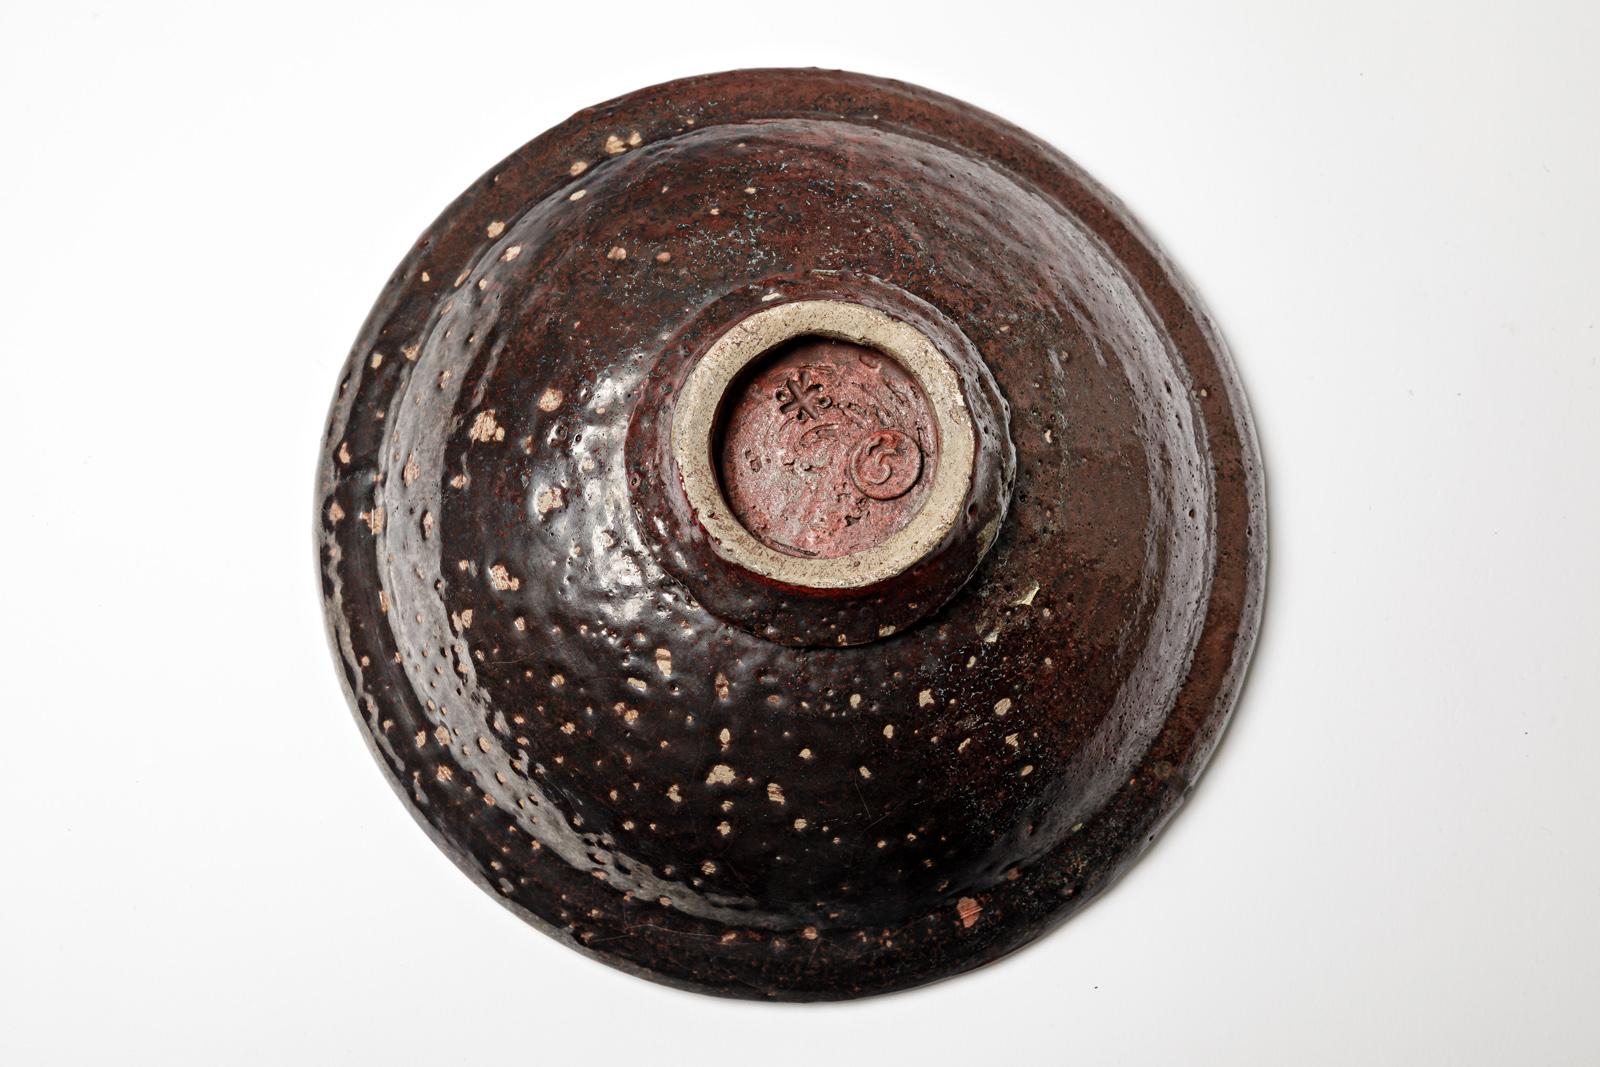 Tasse aus burgunderfarbener glasierter Keramik von Gisèle Buthod-Garçon, um 1980-1990 (20. Jahrhundert) im Angebot